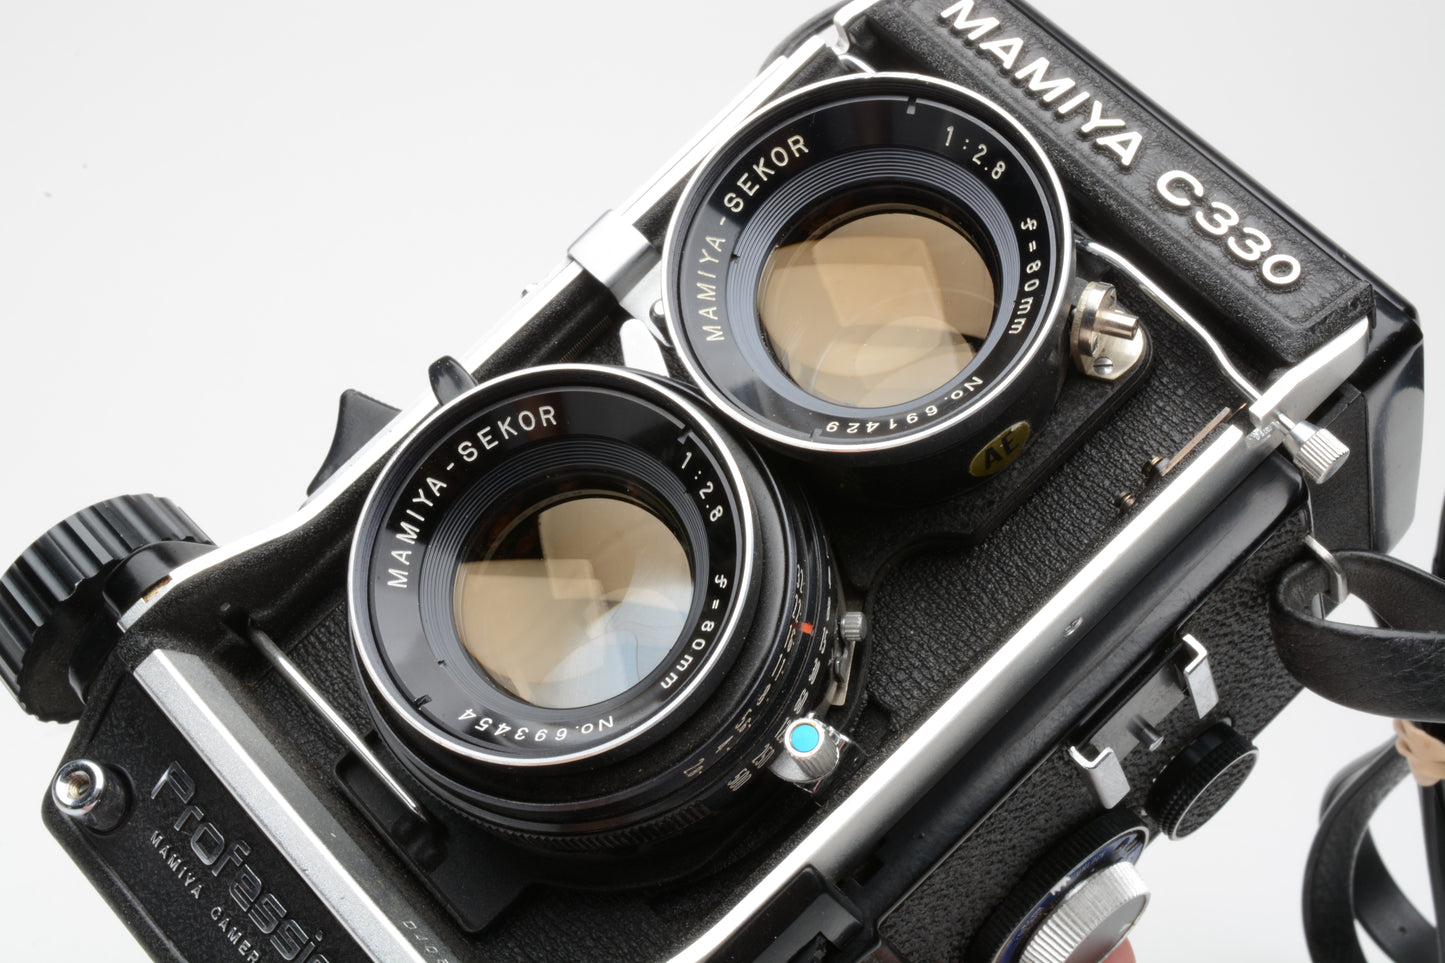 Mamiya C330 Professional 120 TLR camera w/80mm f2.8 lens, strap, tested, great!